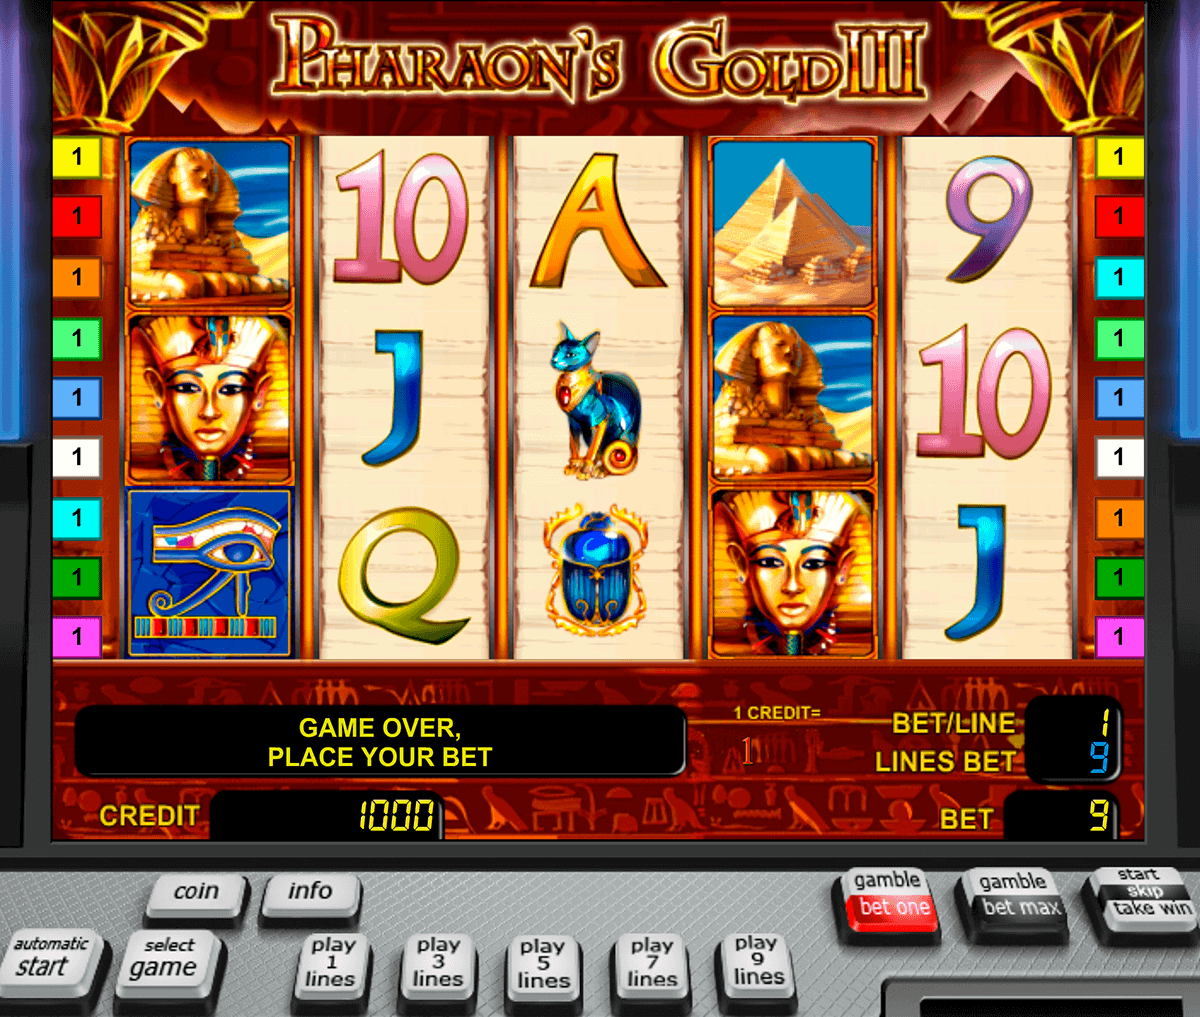 Slot Pharaoh Download